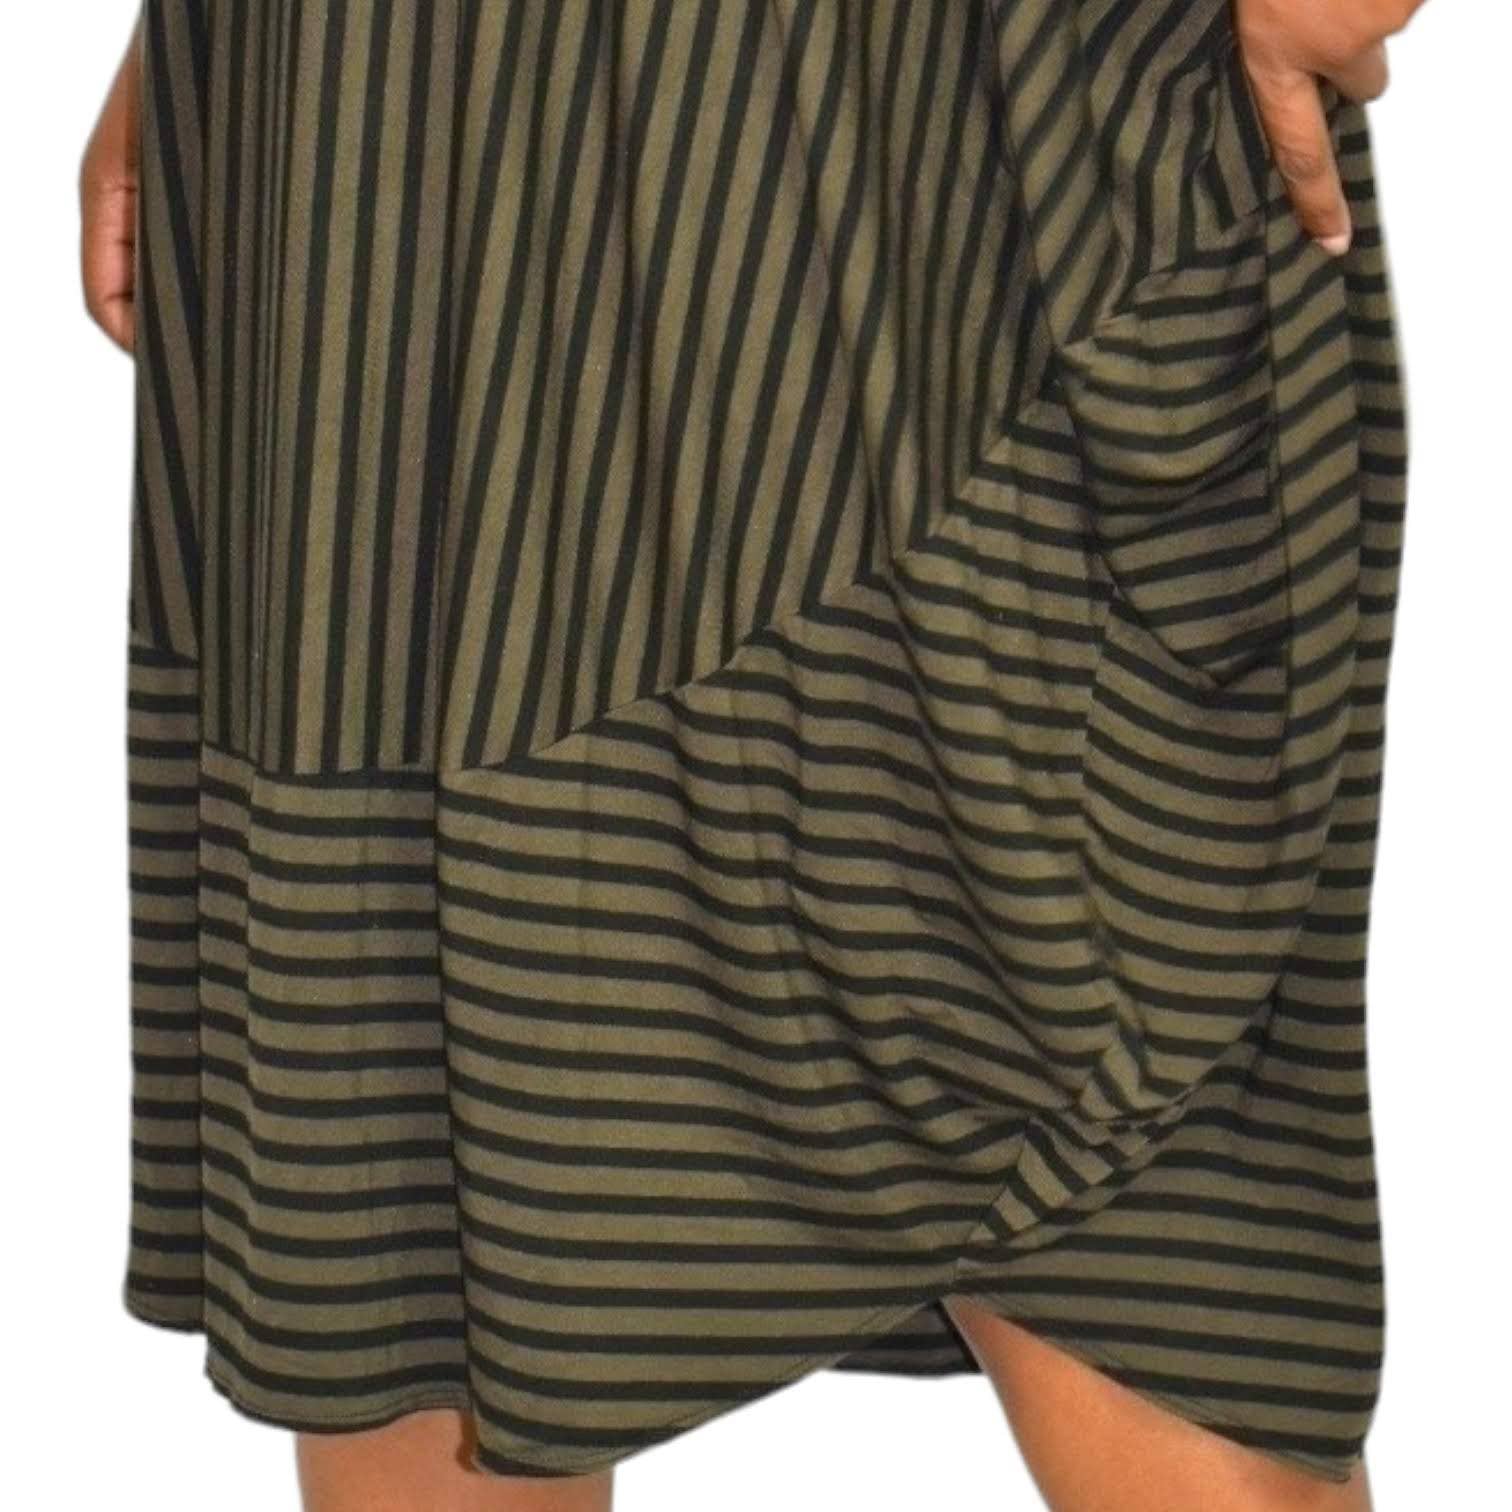 Comfy USA Jumper Dress Green Bubble Hem Tunic Draped Striped Jersey Plus Size XL